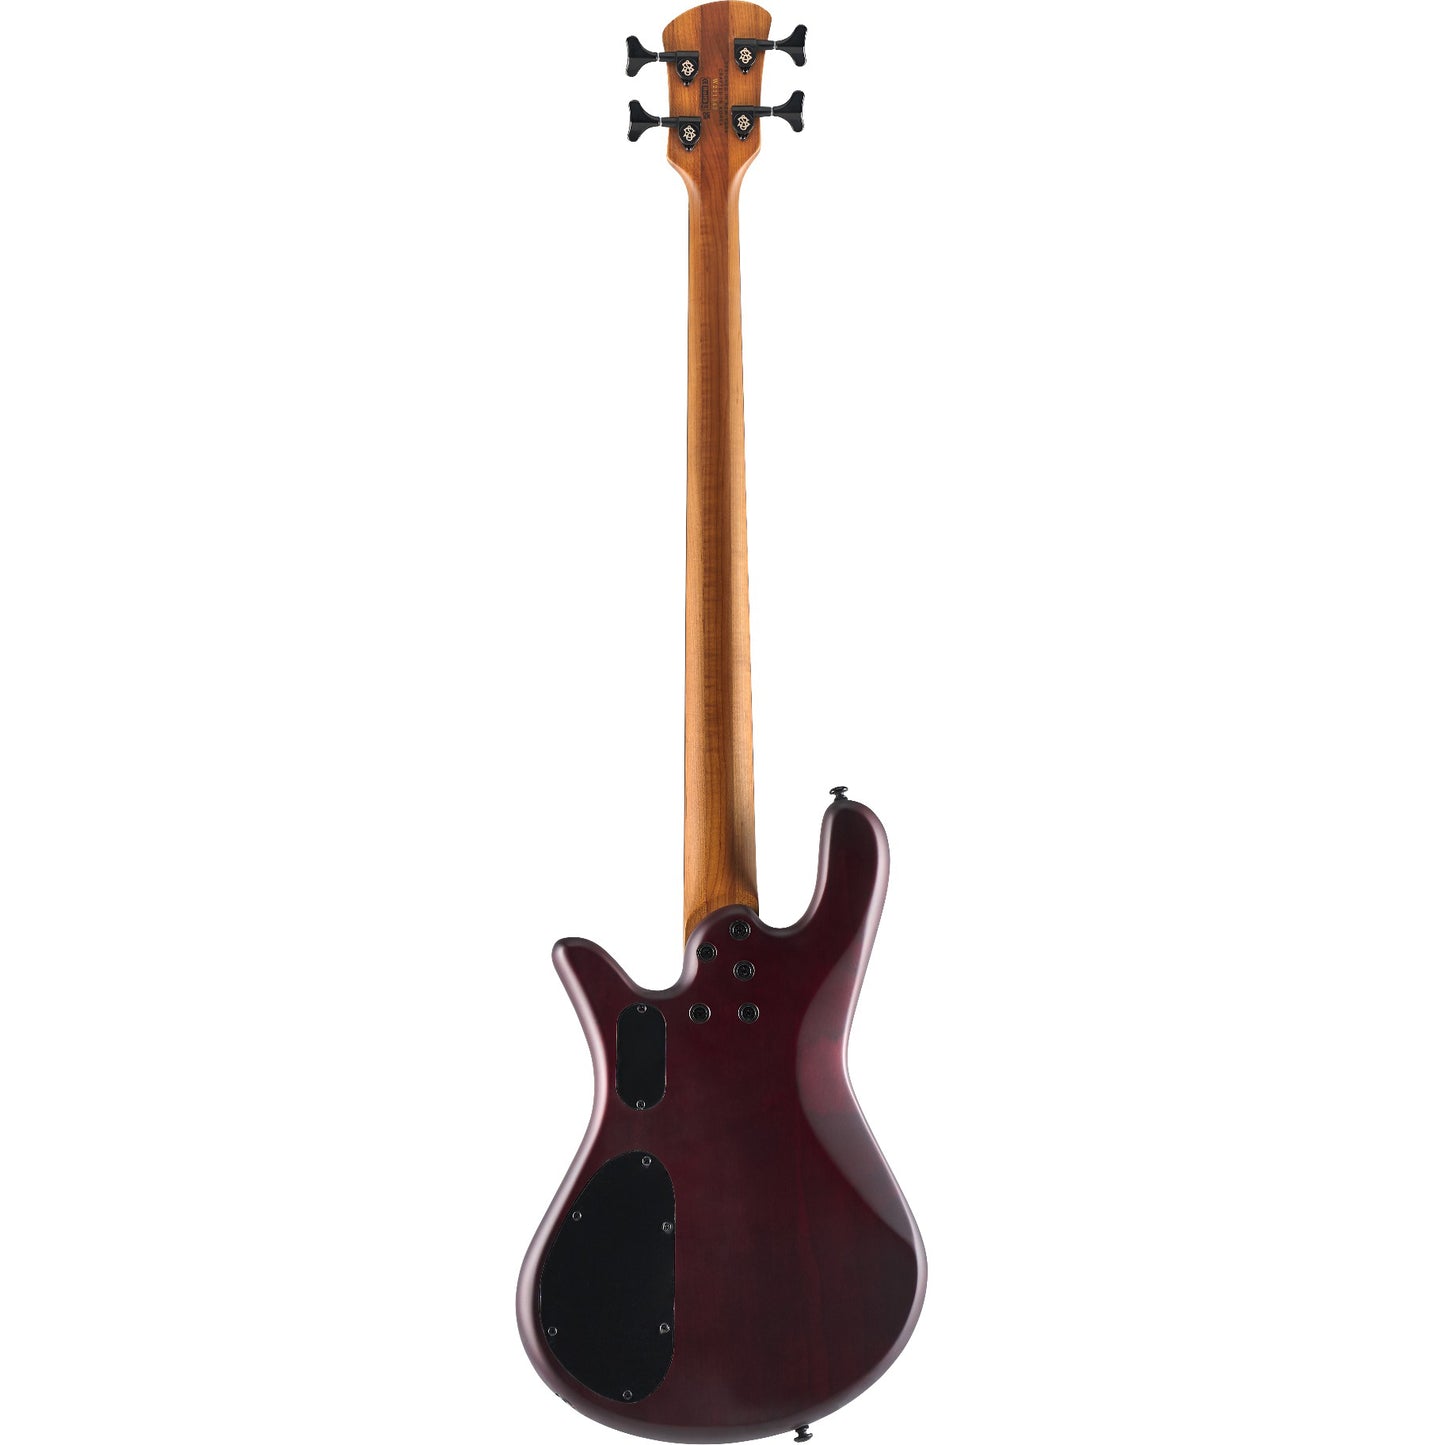 Spector NS Pulse 4 String Bass in Black Cherry Matte